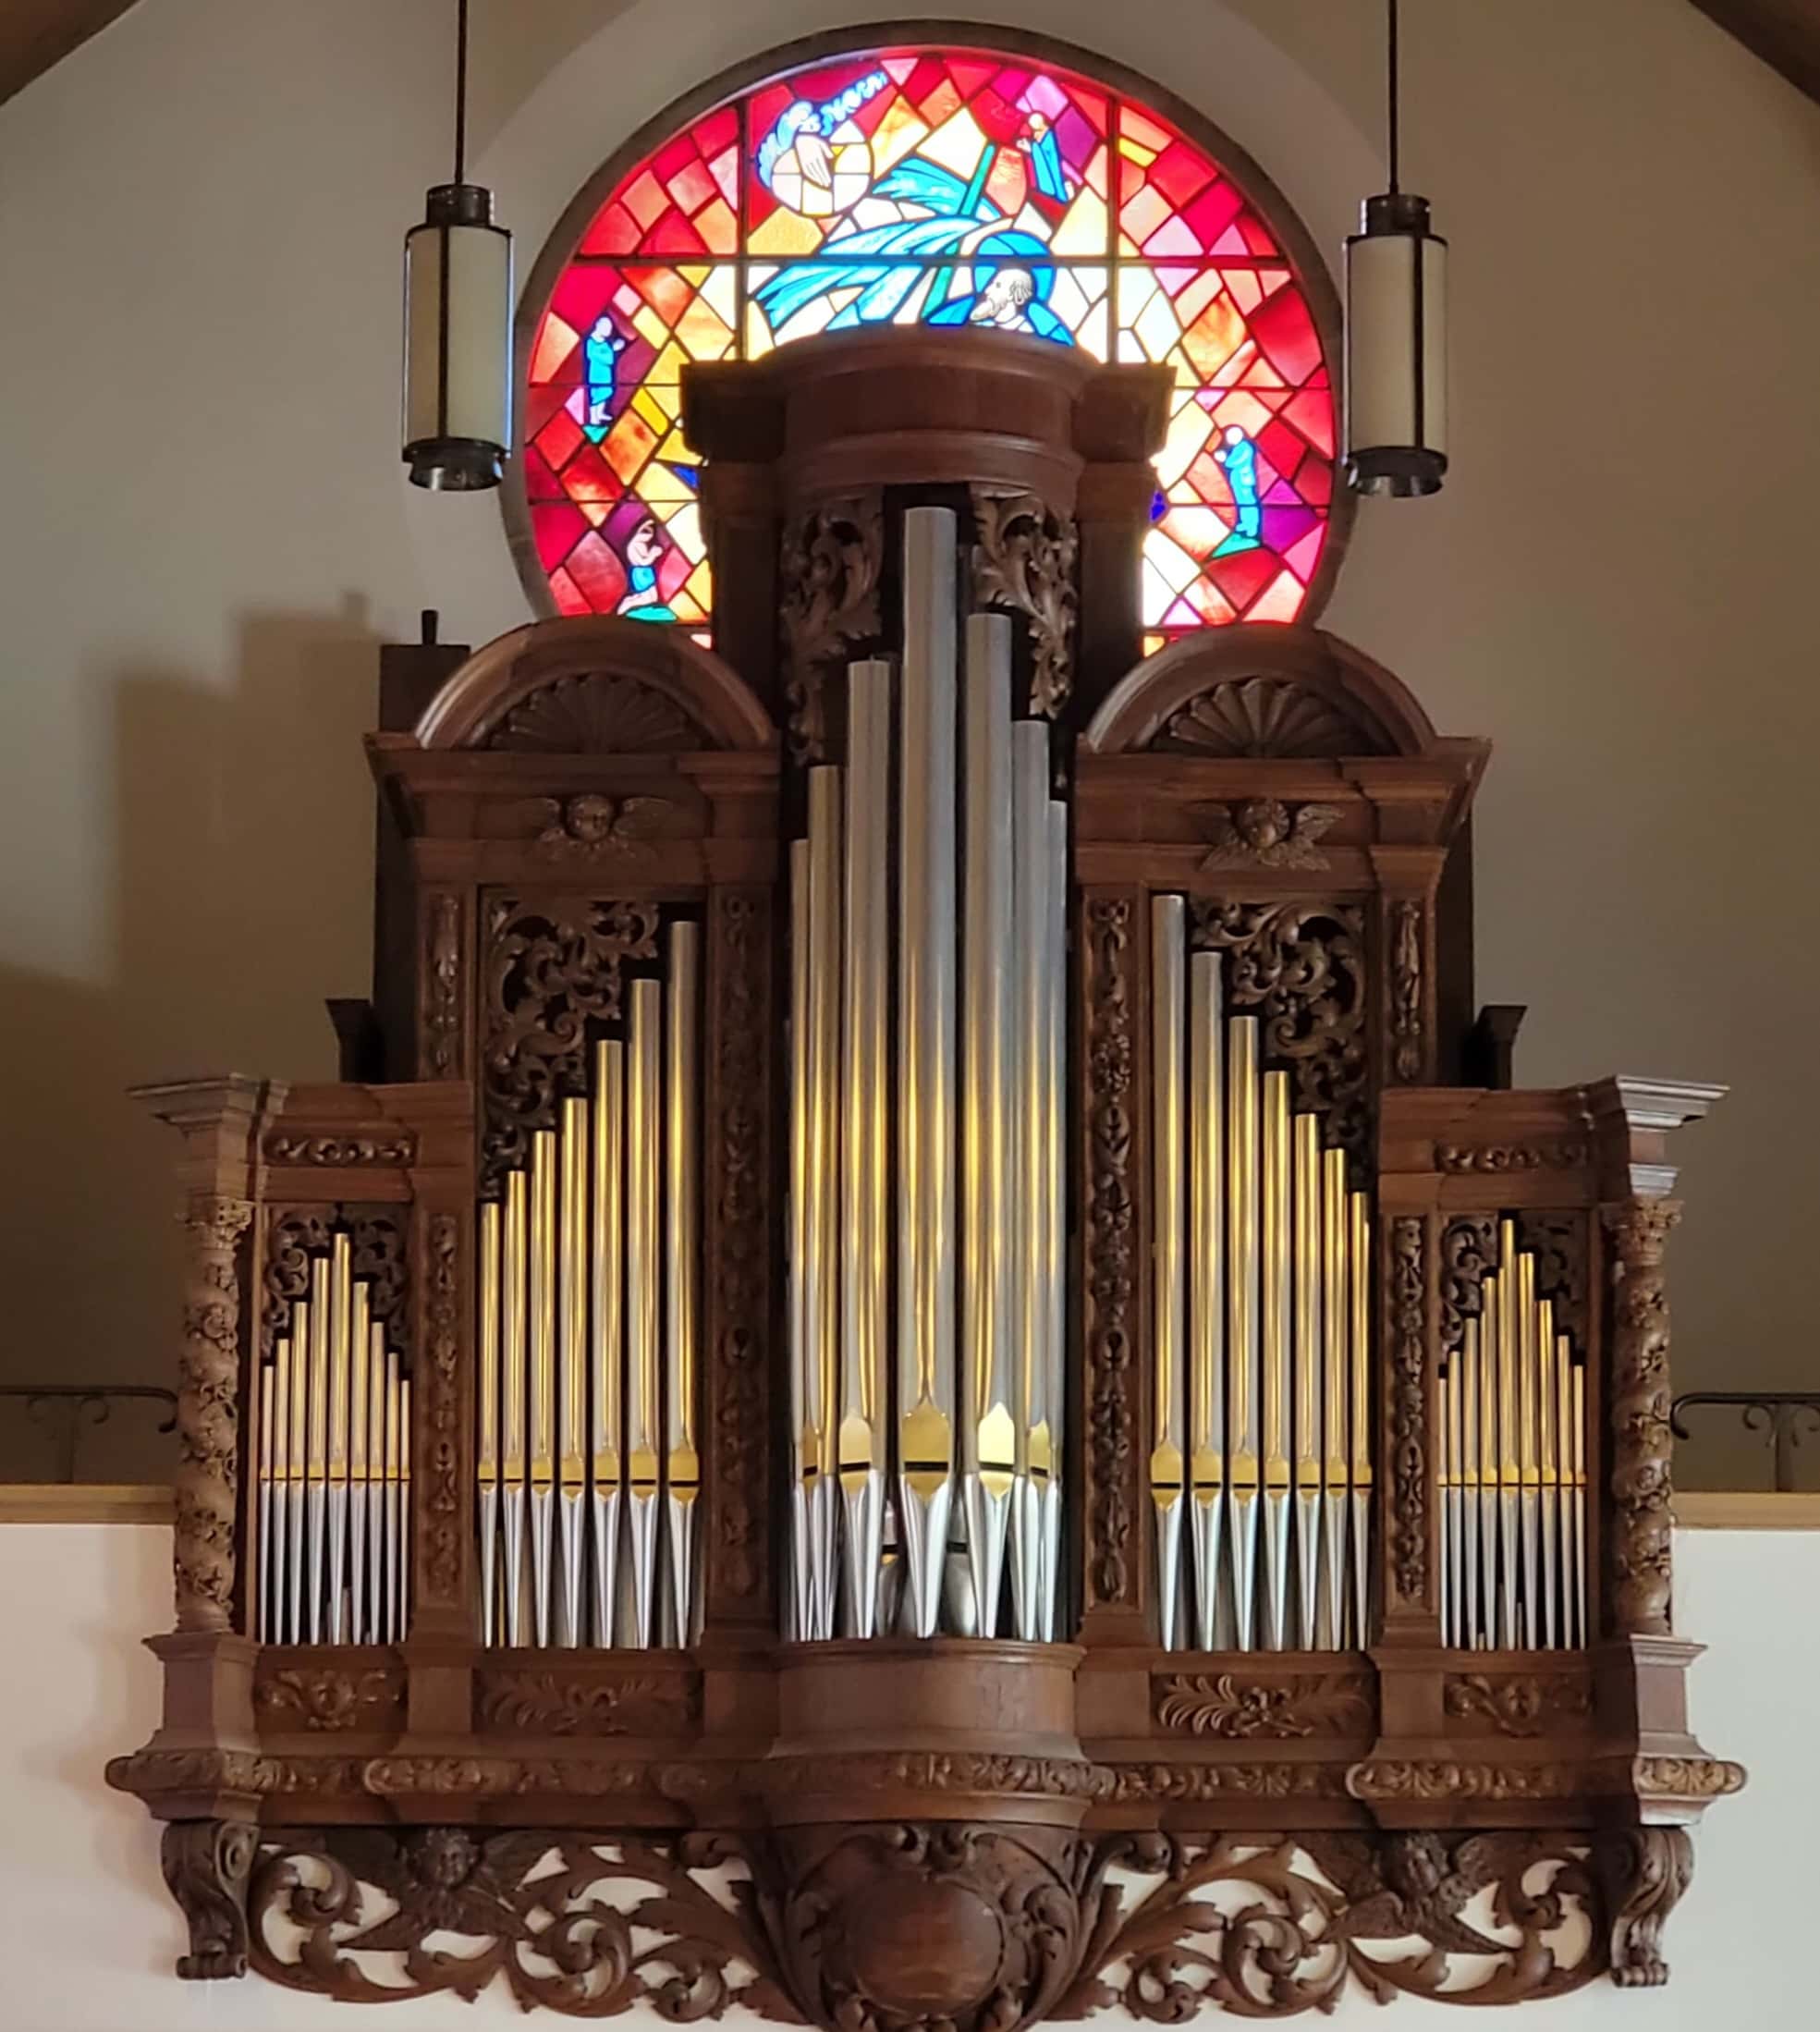 Hills Church photo Wallace Chapel organ pipes